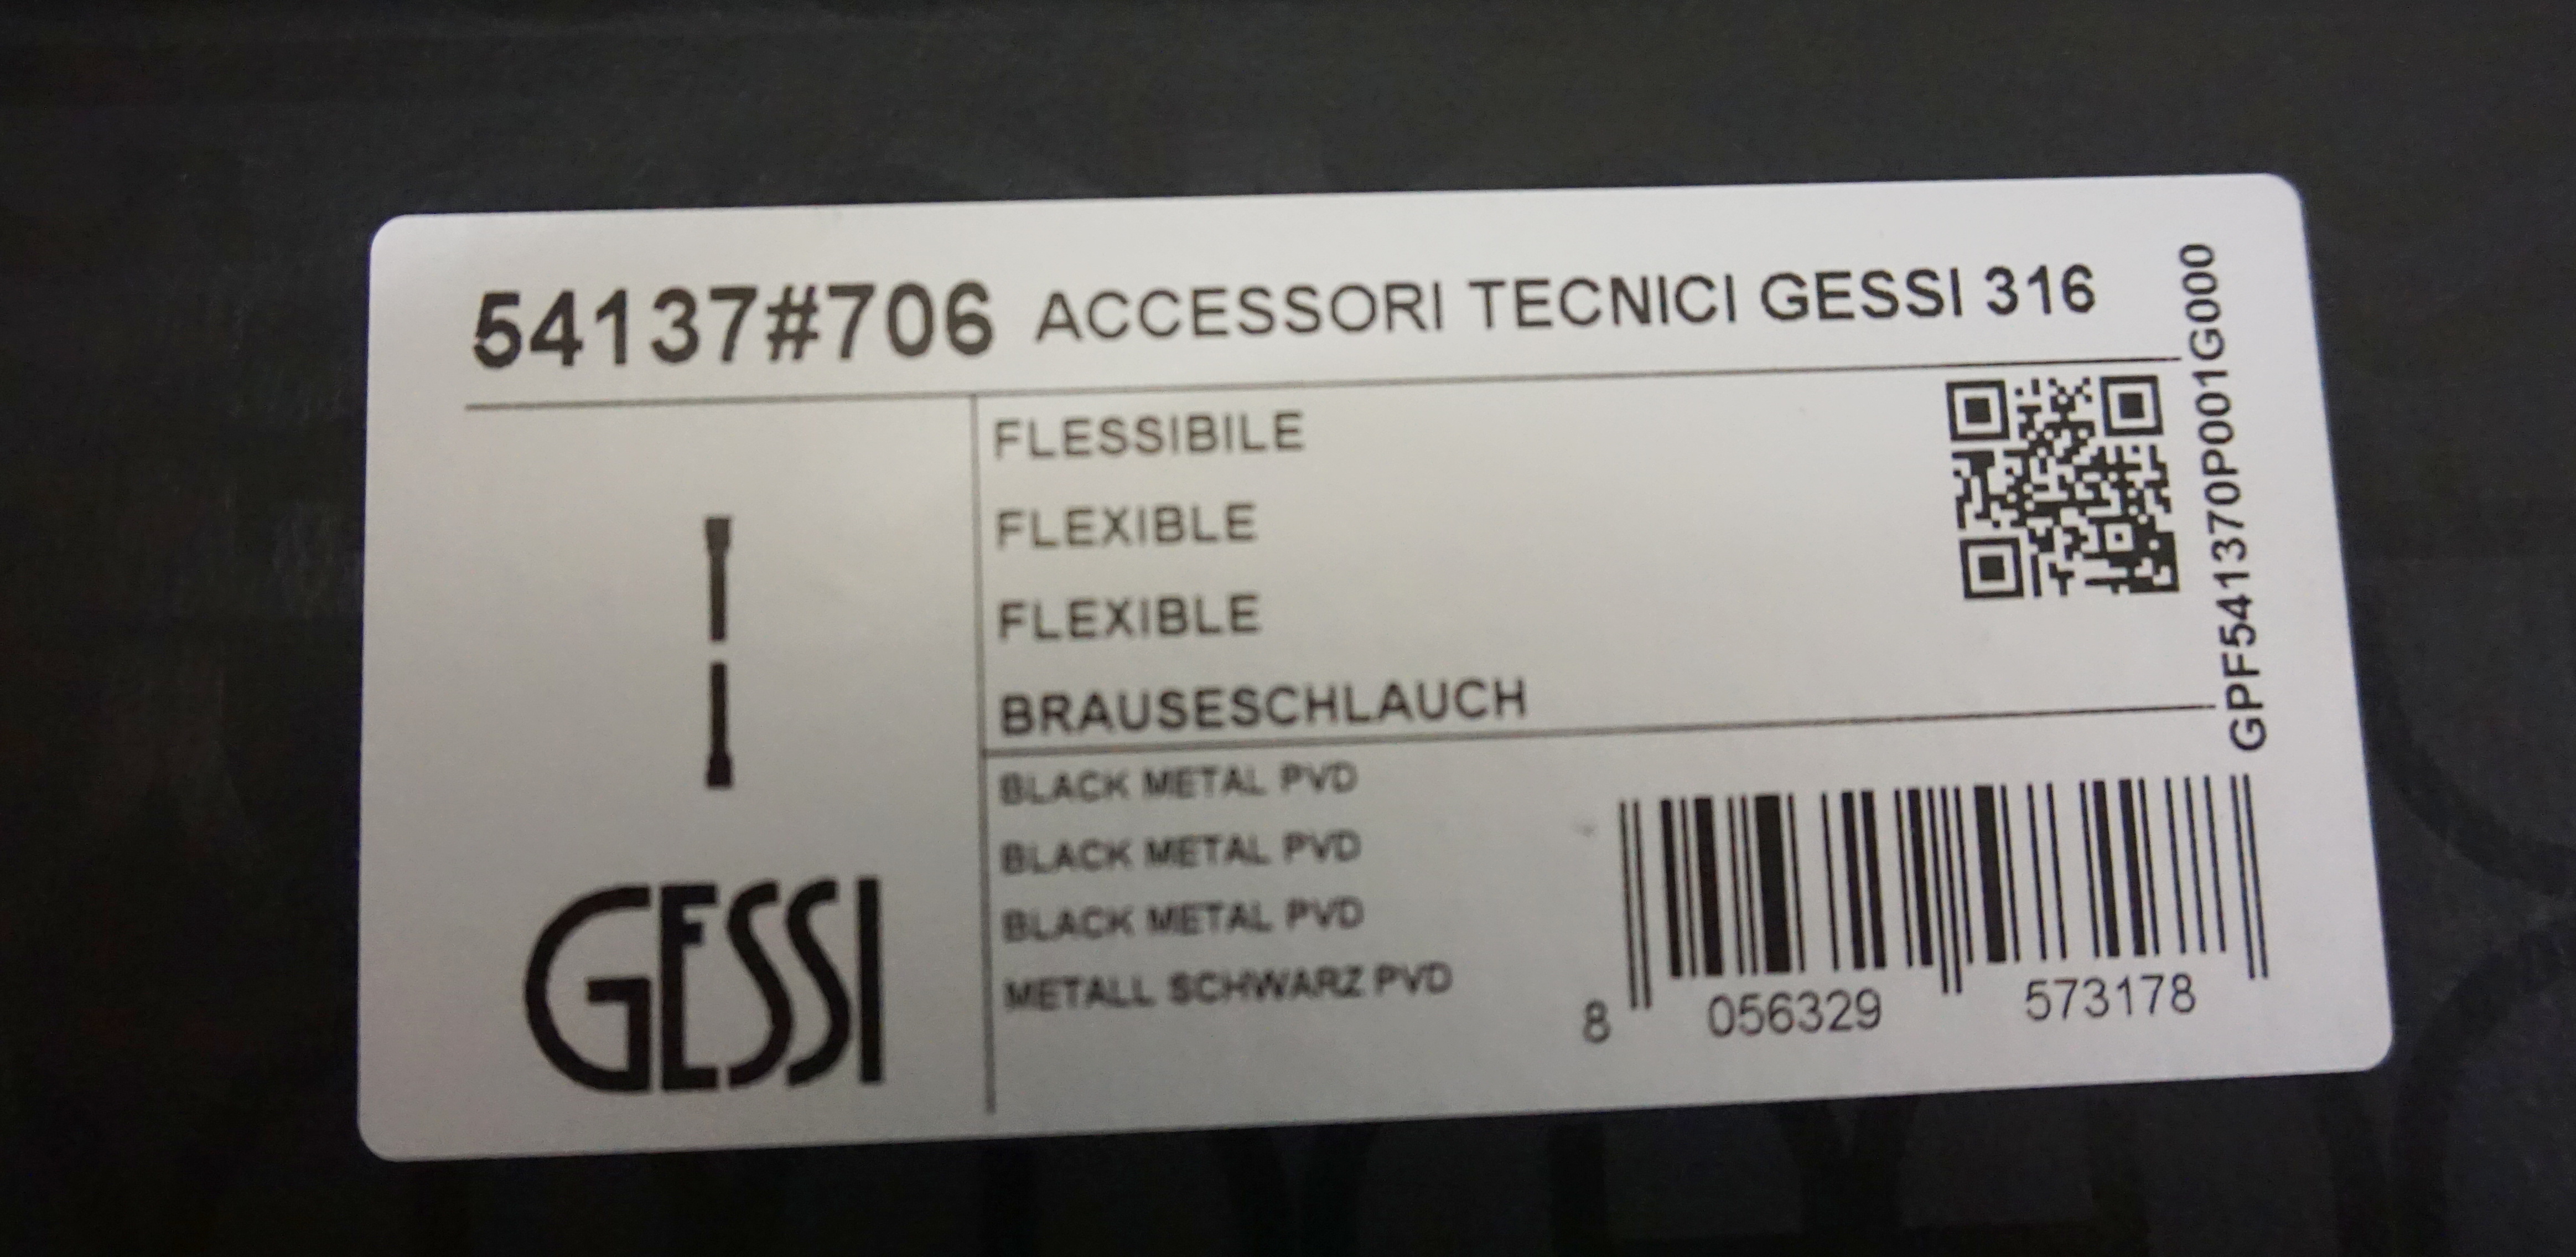 Gessi Dusche316 Brauseschlauch 150cm schwarz matt/Metall Schwarz PVD; 54137706 